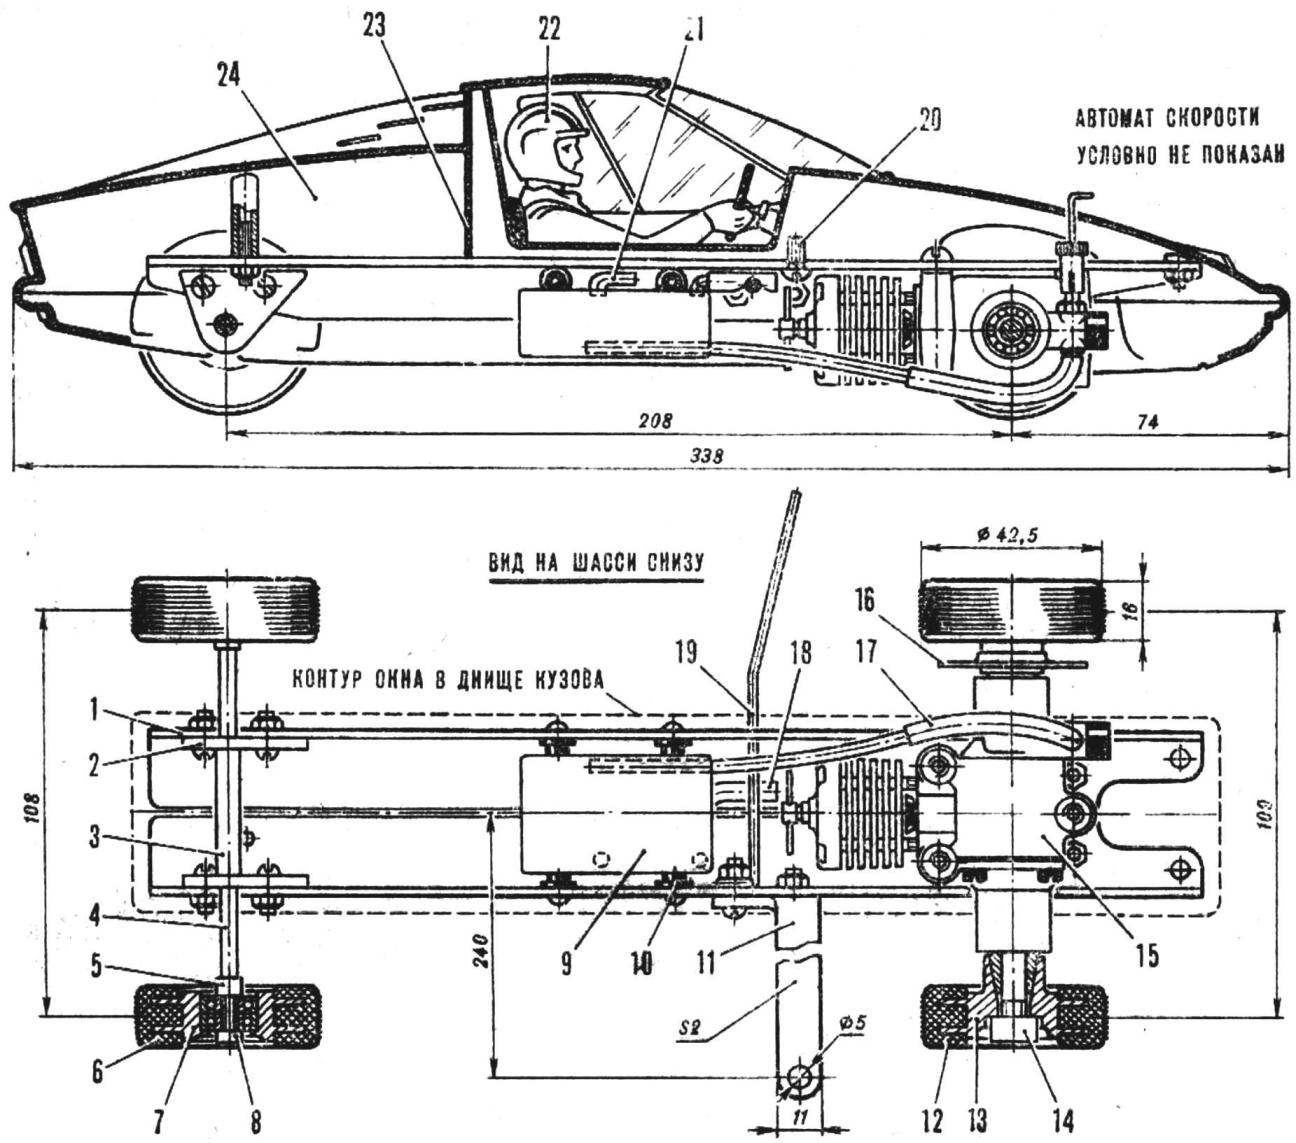 Fig. 2. The car class 